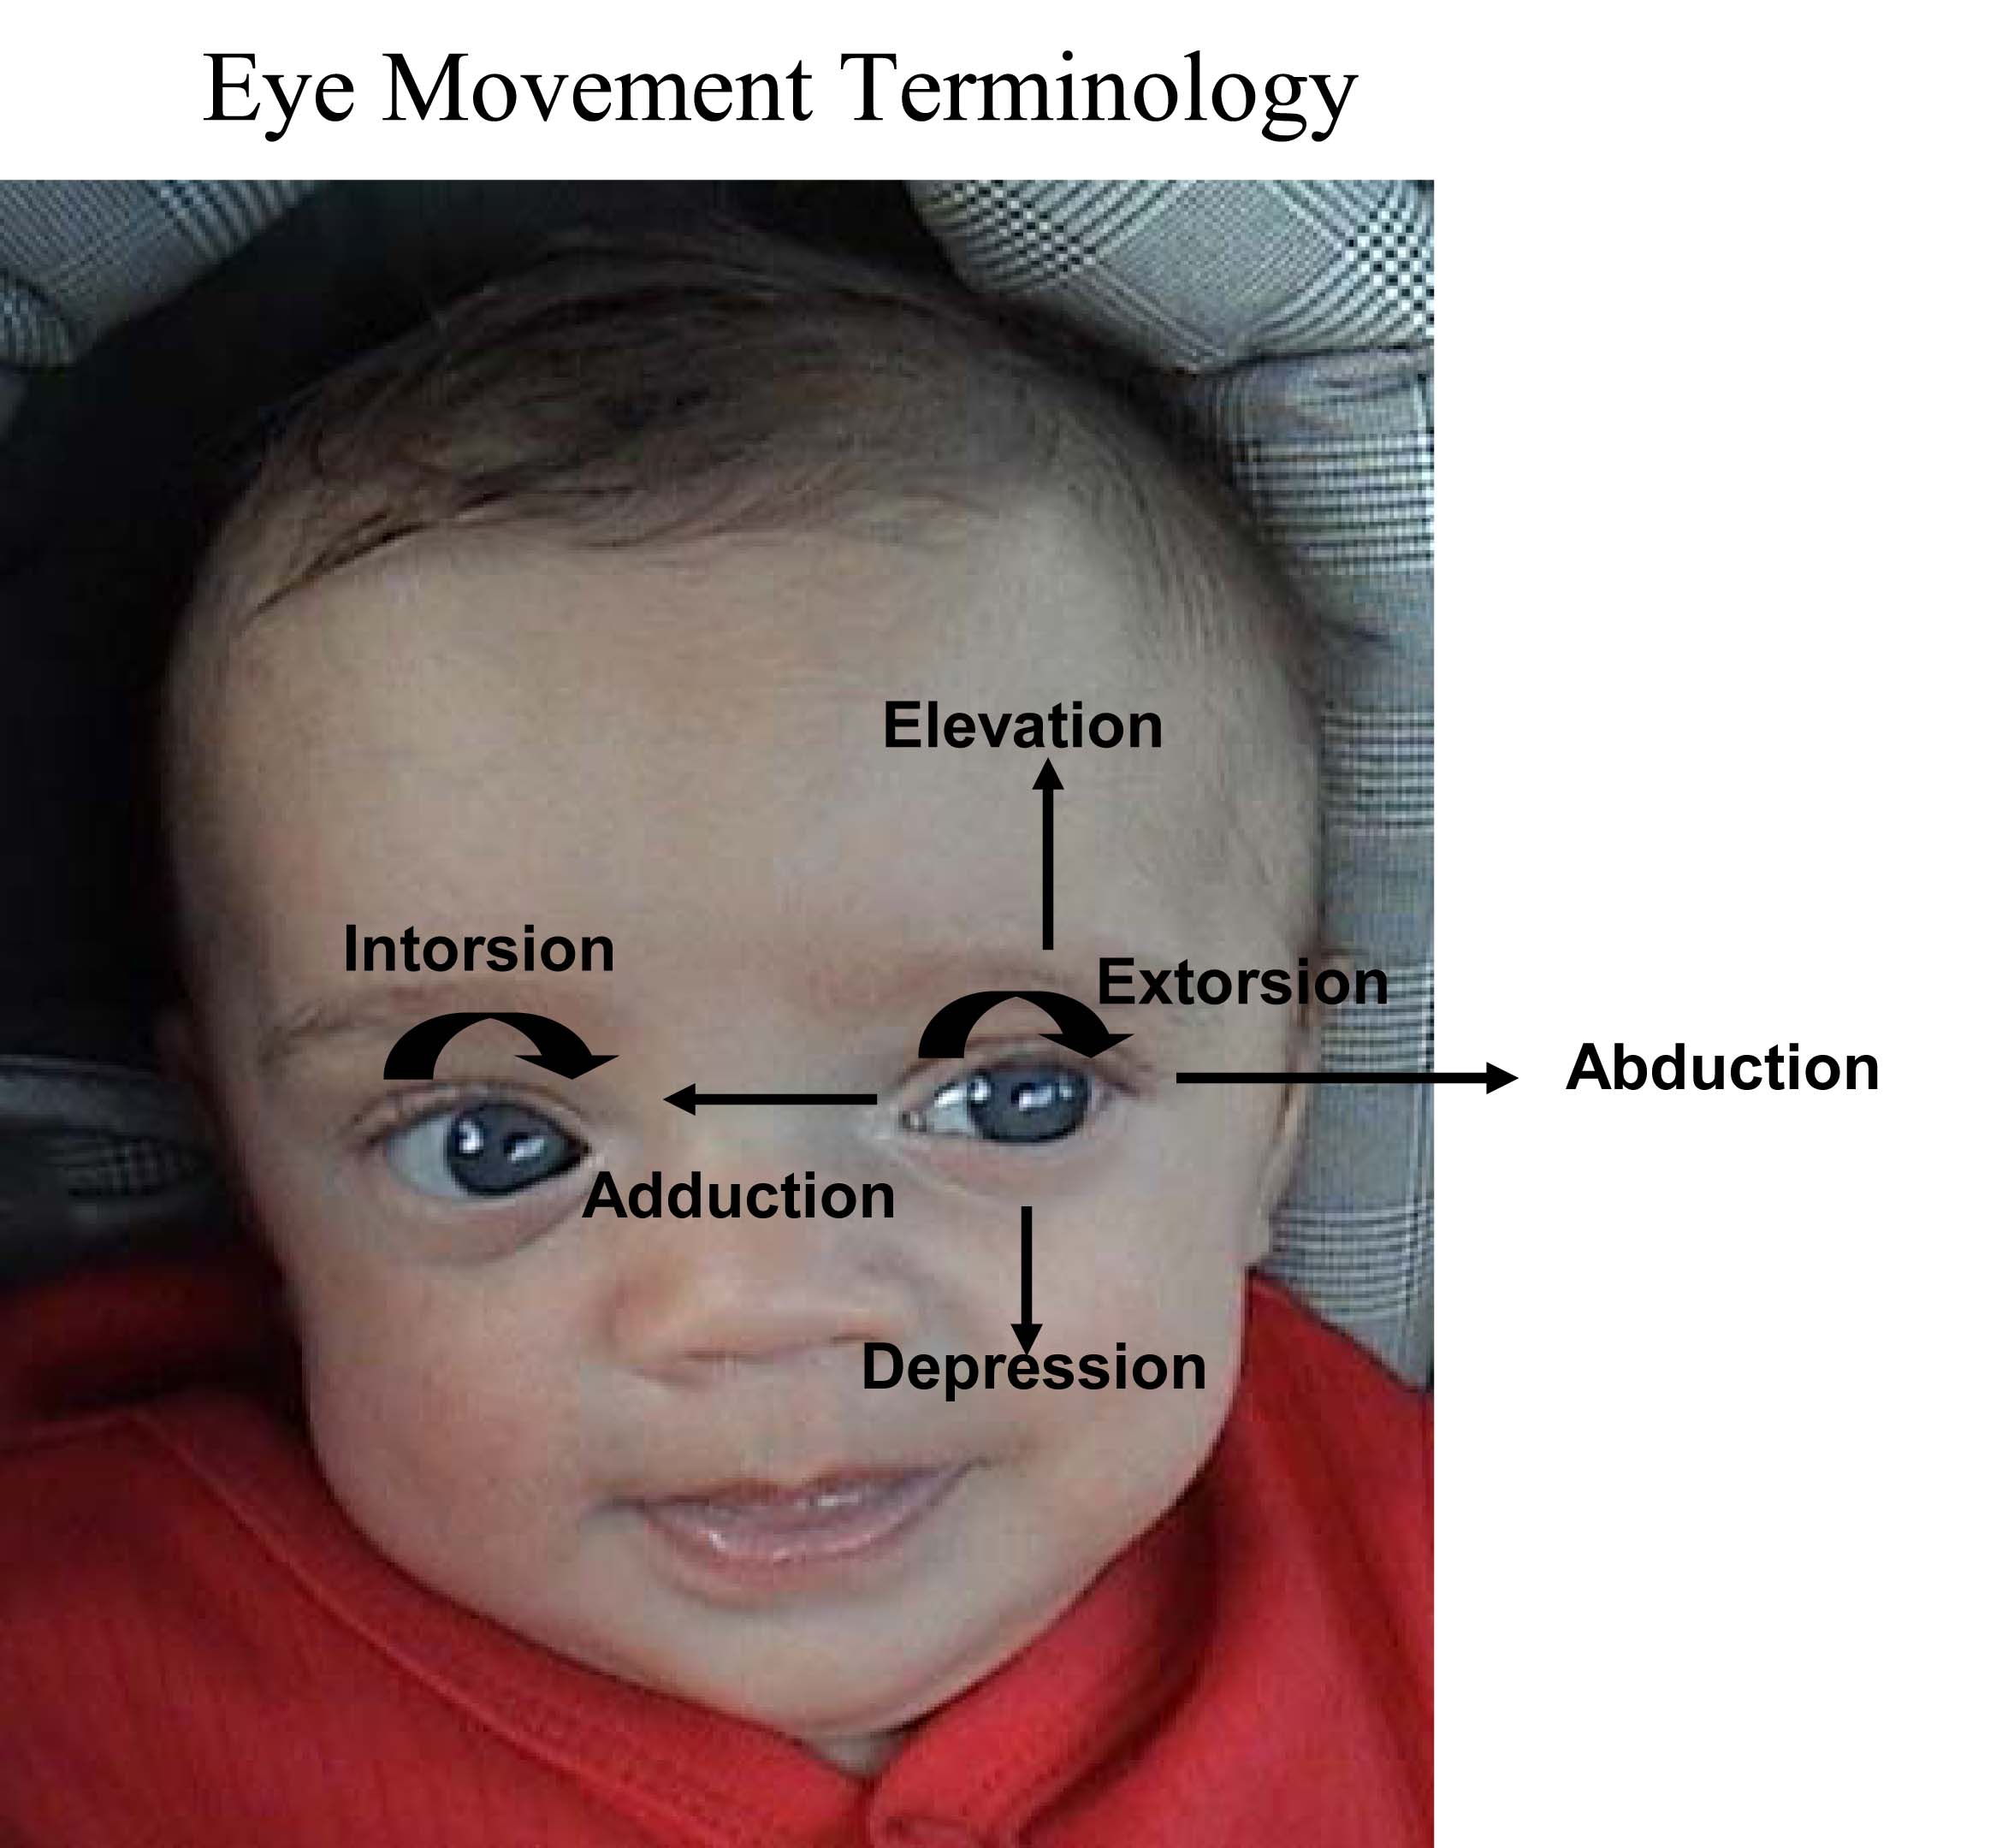 Eye movement terminology